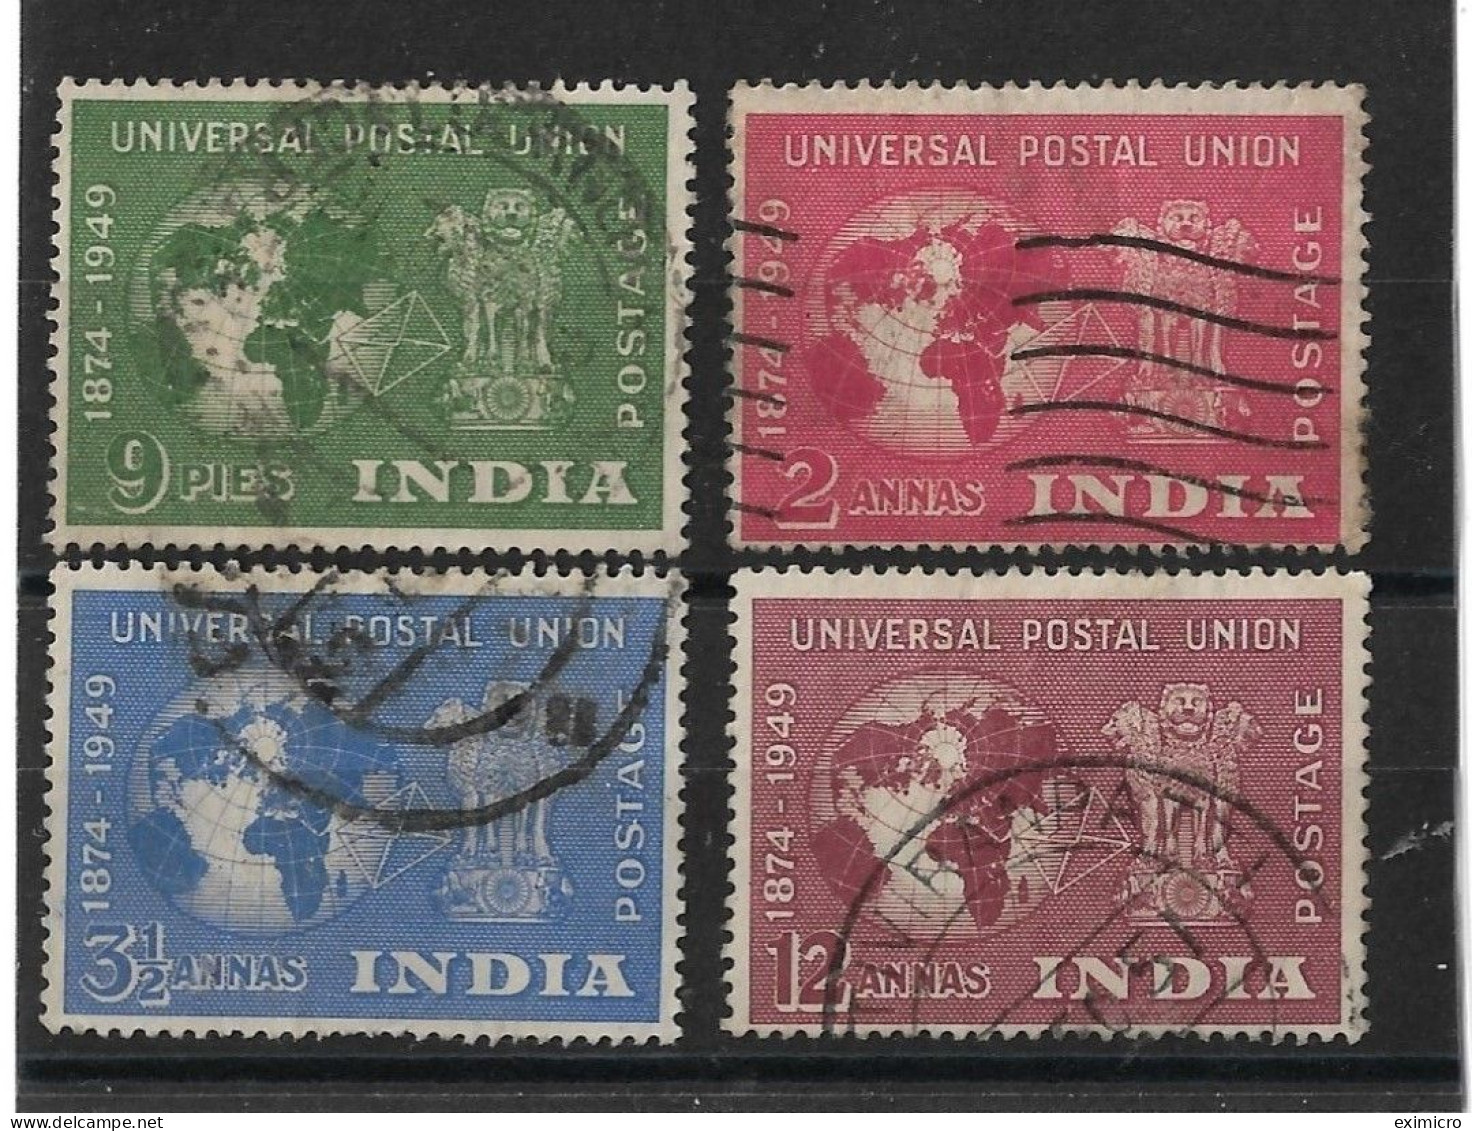 INDIA 1949 UPU SET FINE USED Cat £12 - Used Stamps